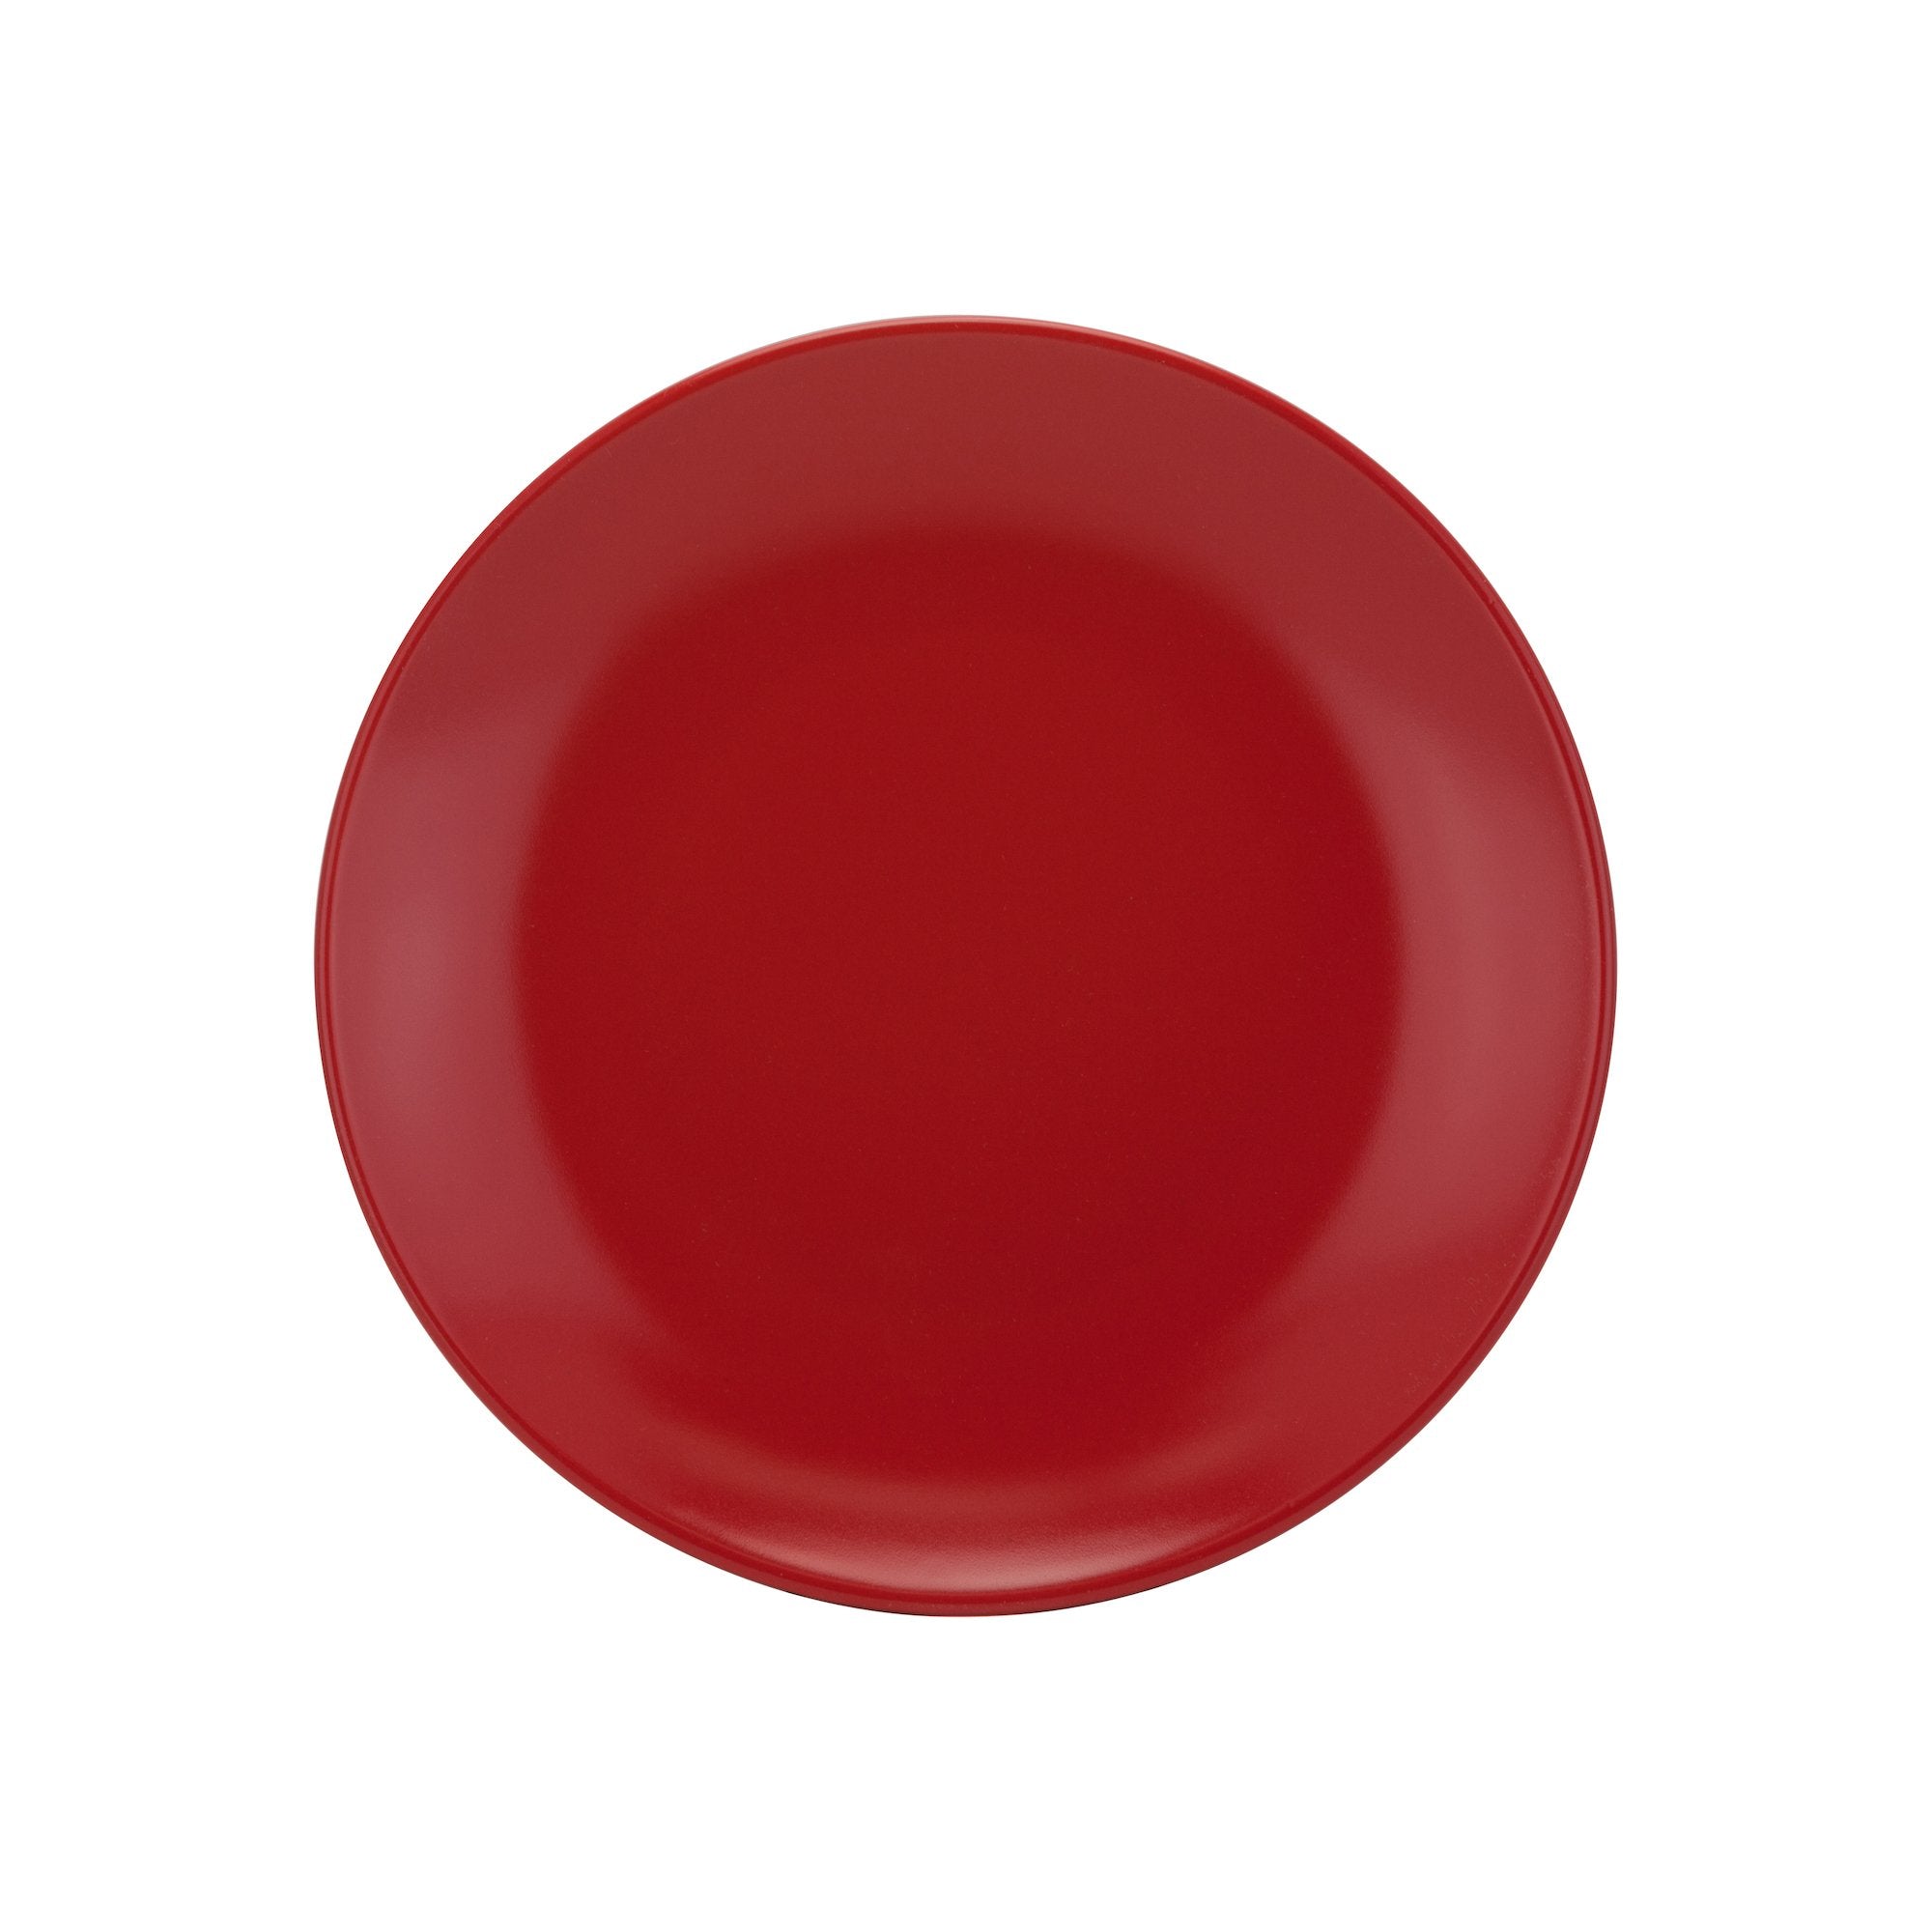 WM-4-RED, Dinnerware, Salad Plate   (24/Case) - iFoodservice Online